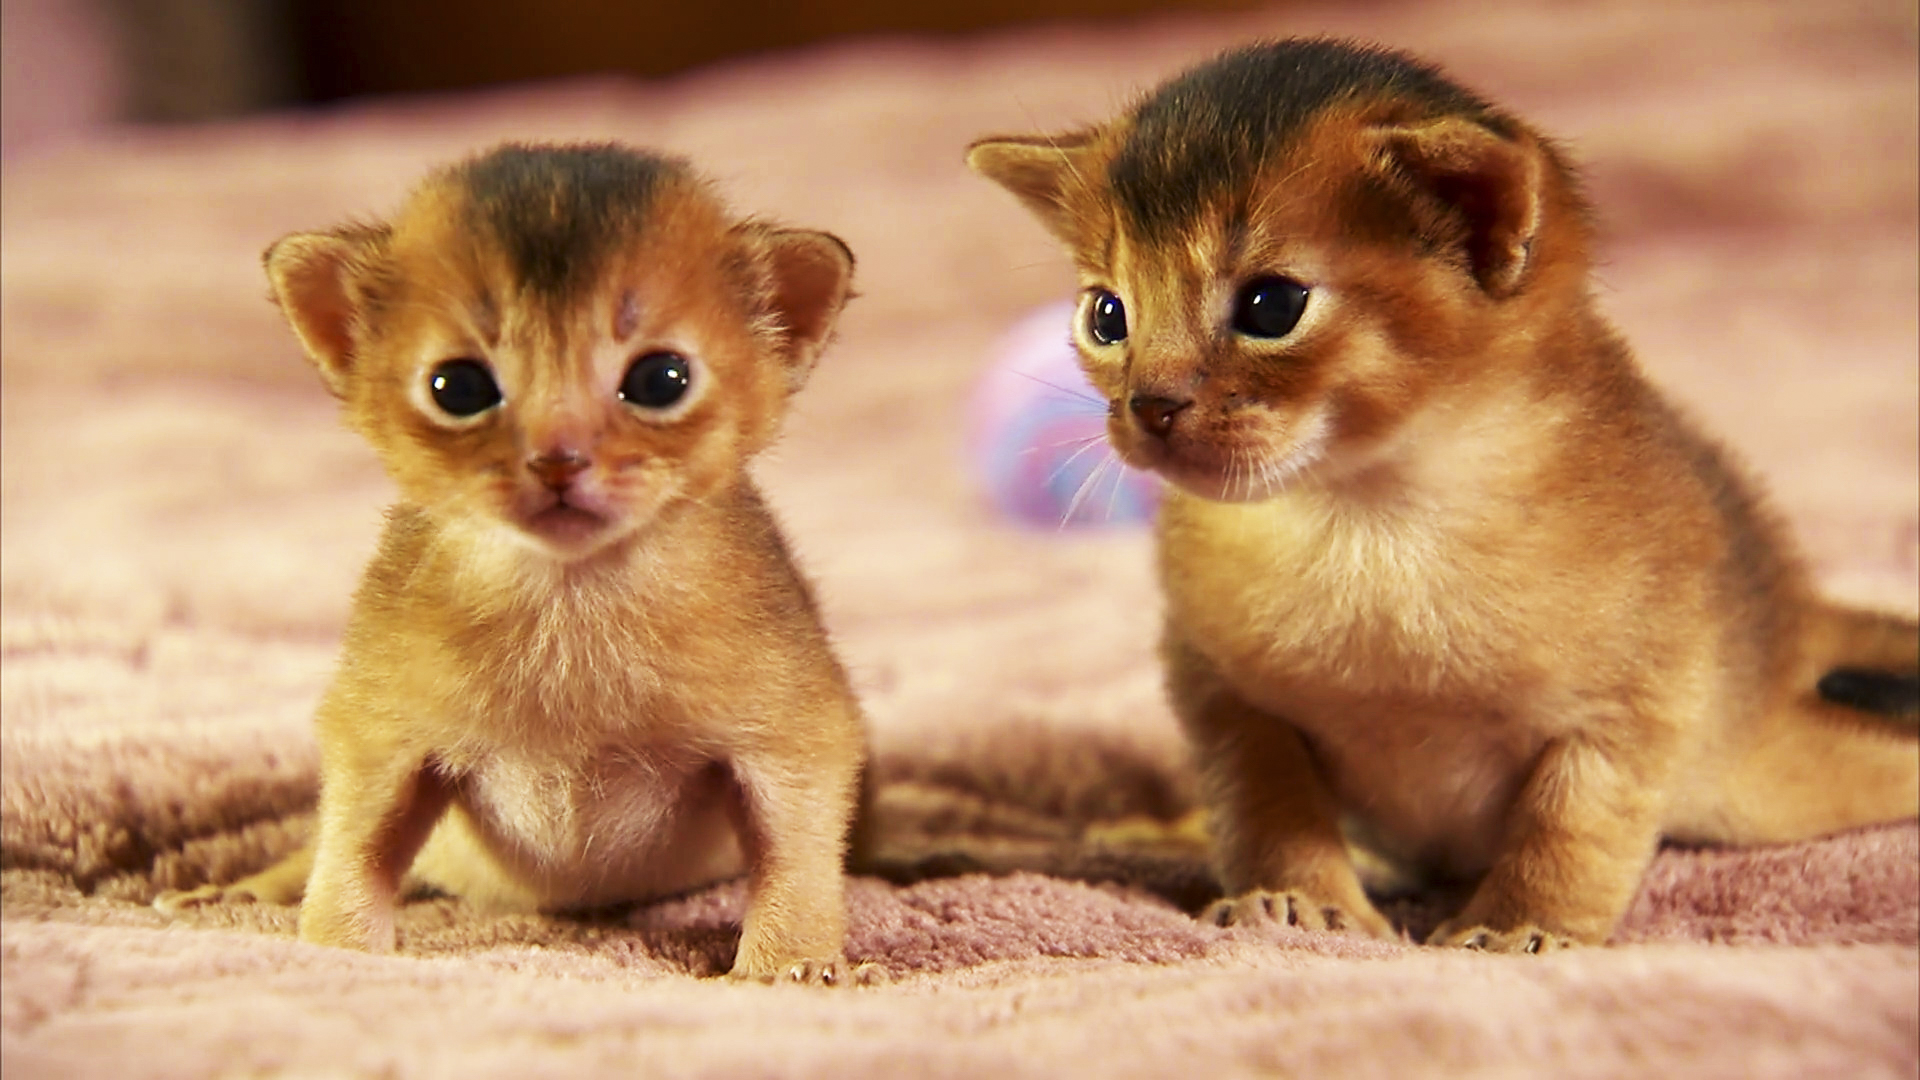 Too Cute! - S1 E1 Too Cute! Kittens - Animal Planet GO